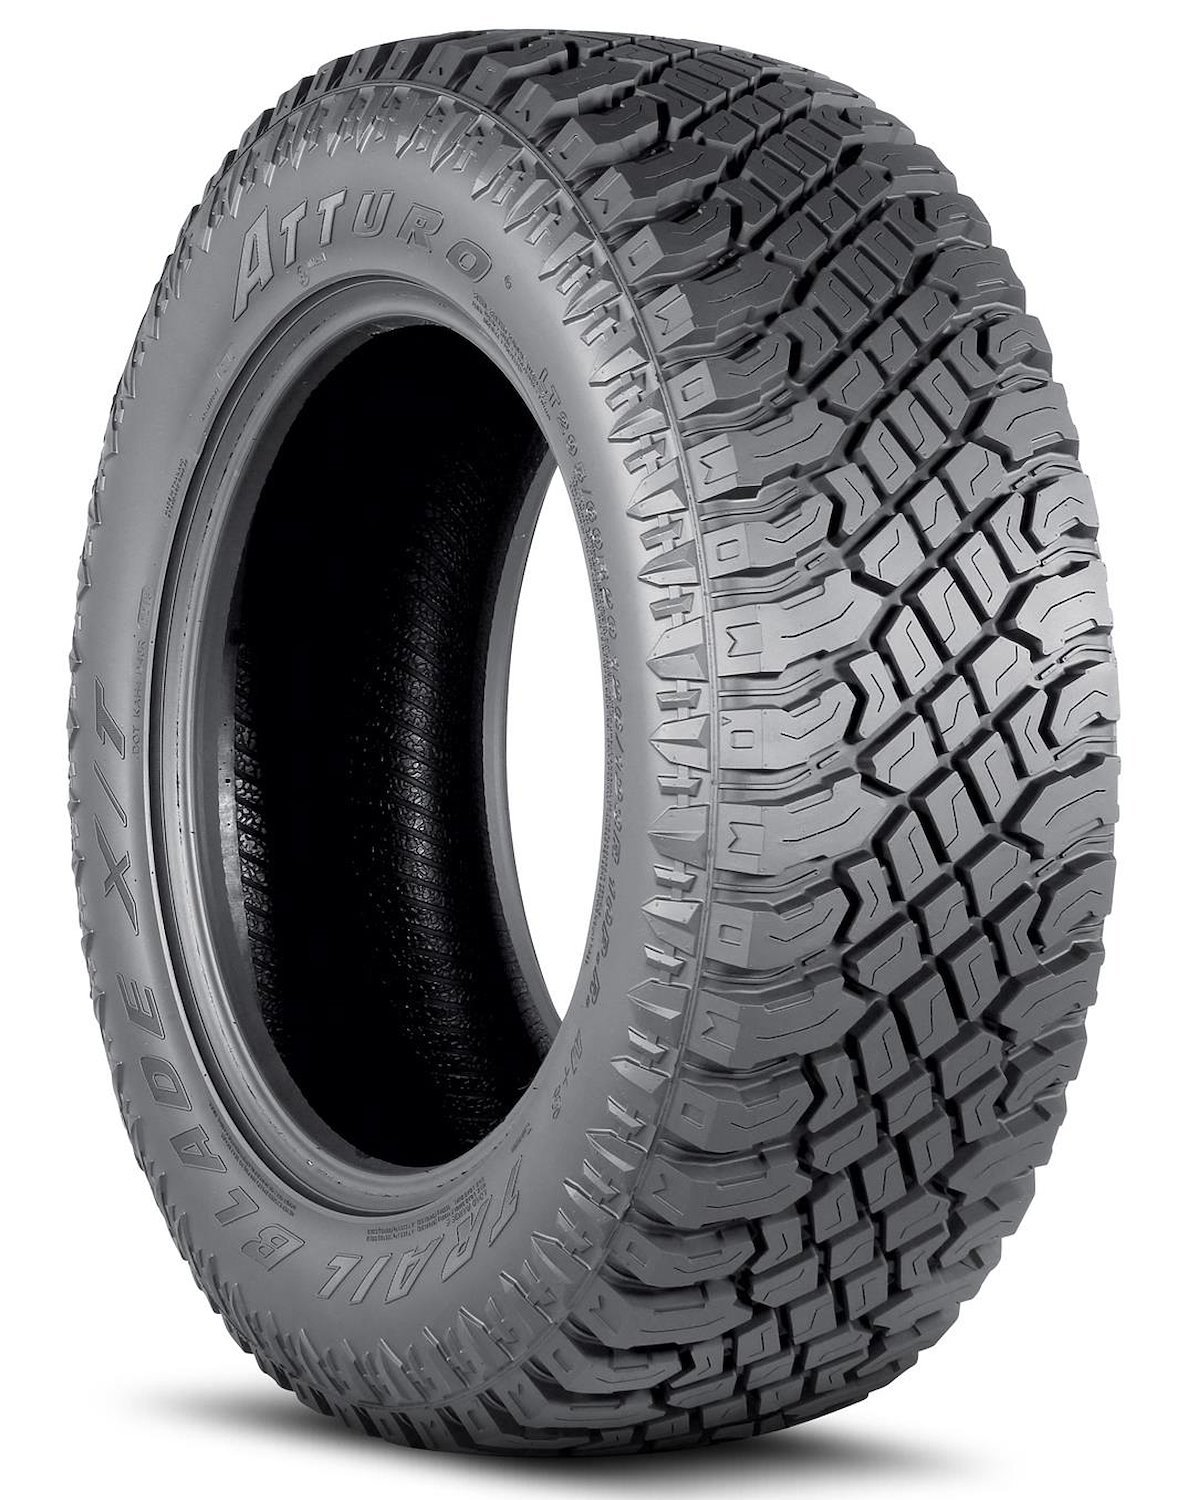 TBXT-BLFR3PA Trail Blade X/T Tire, 235/65R17